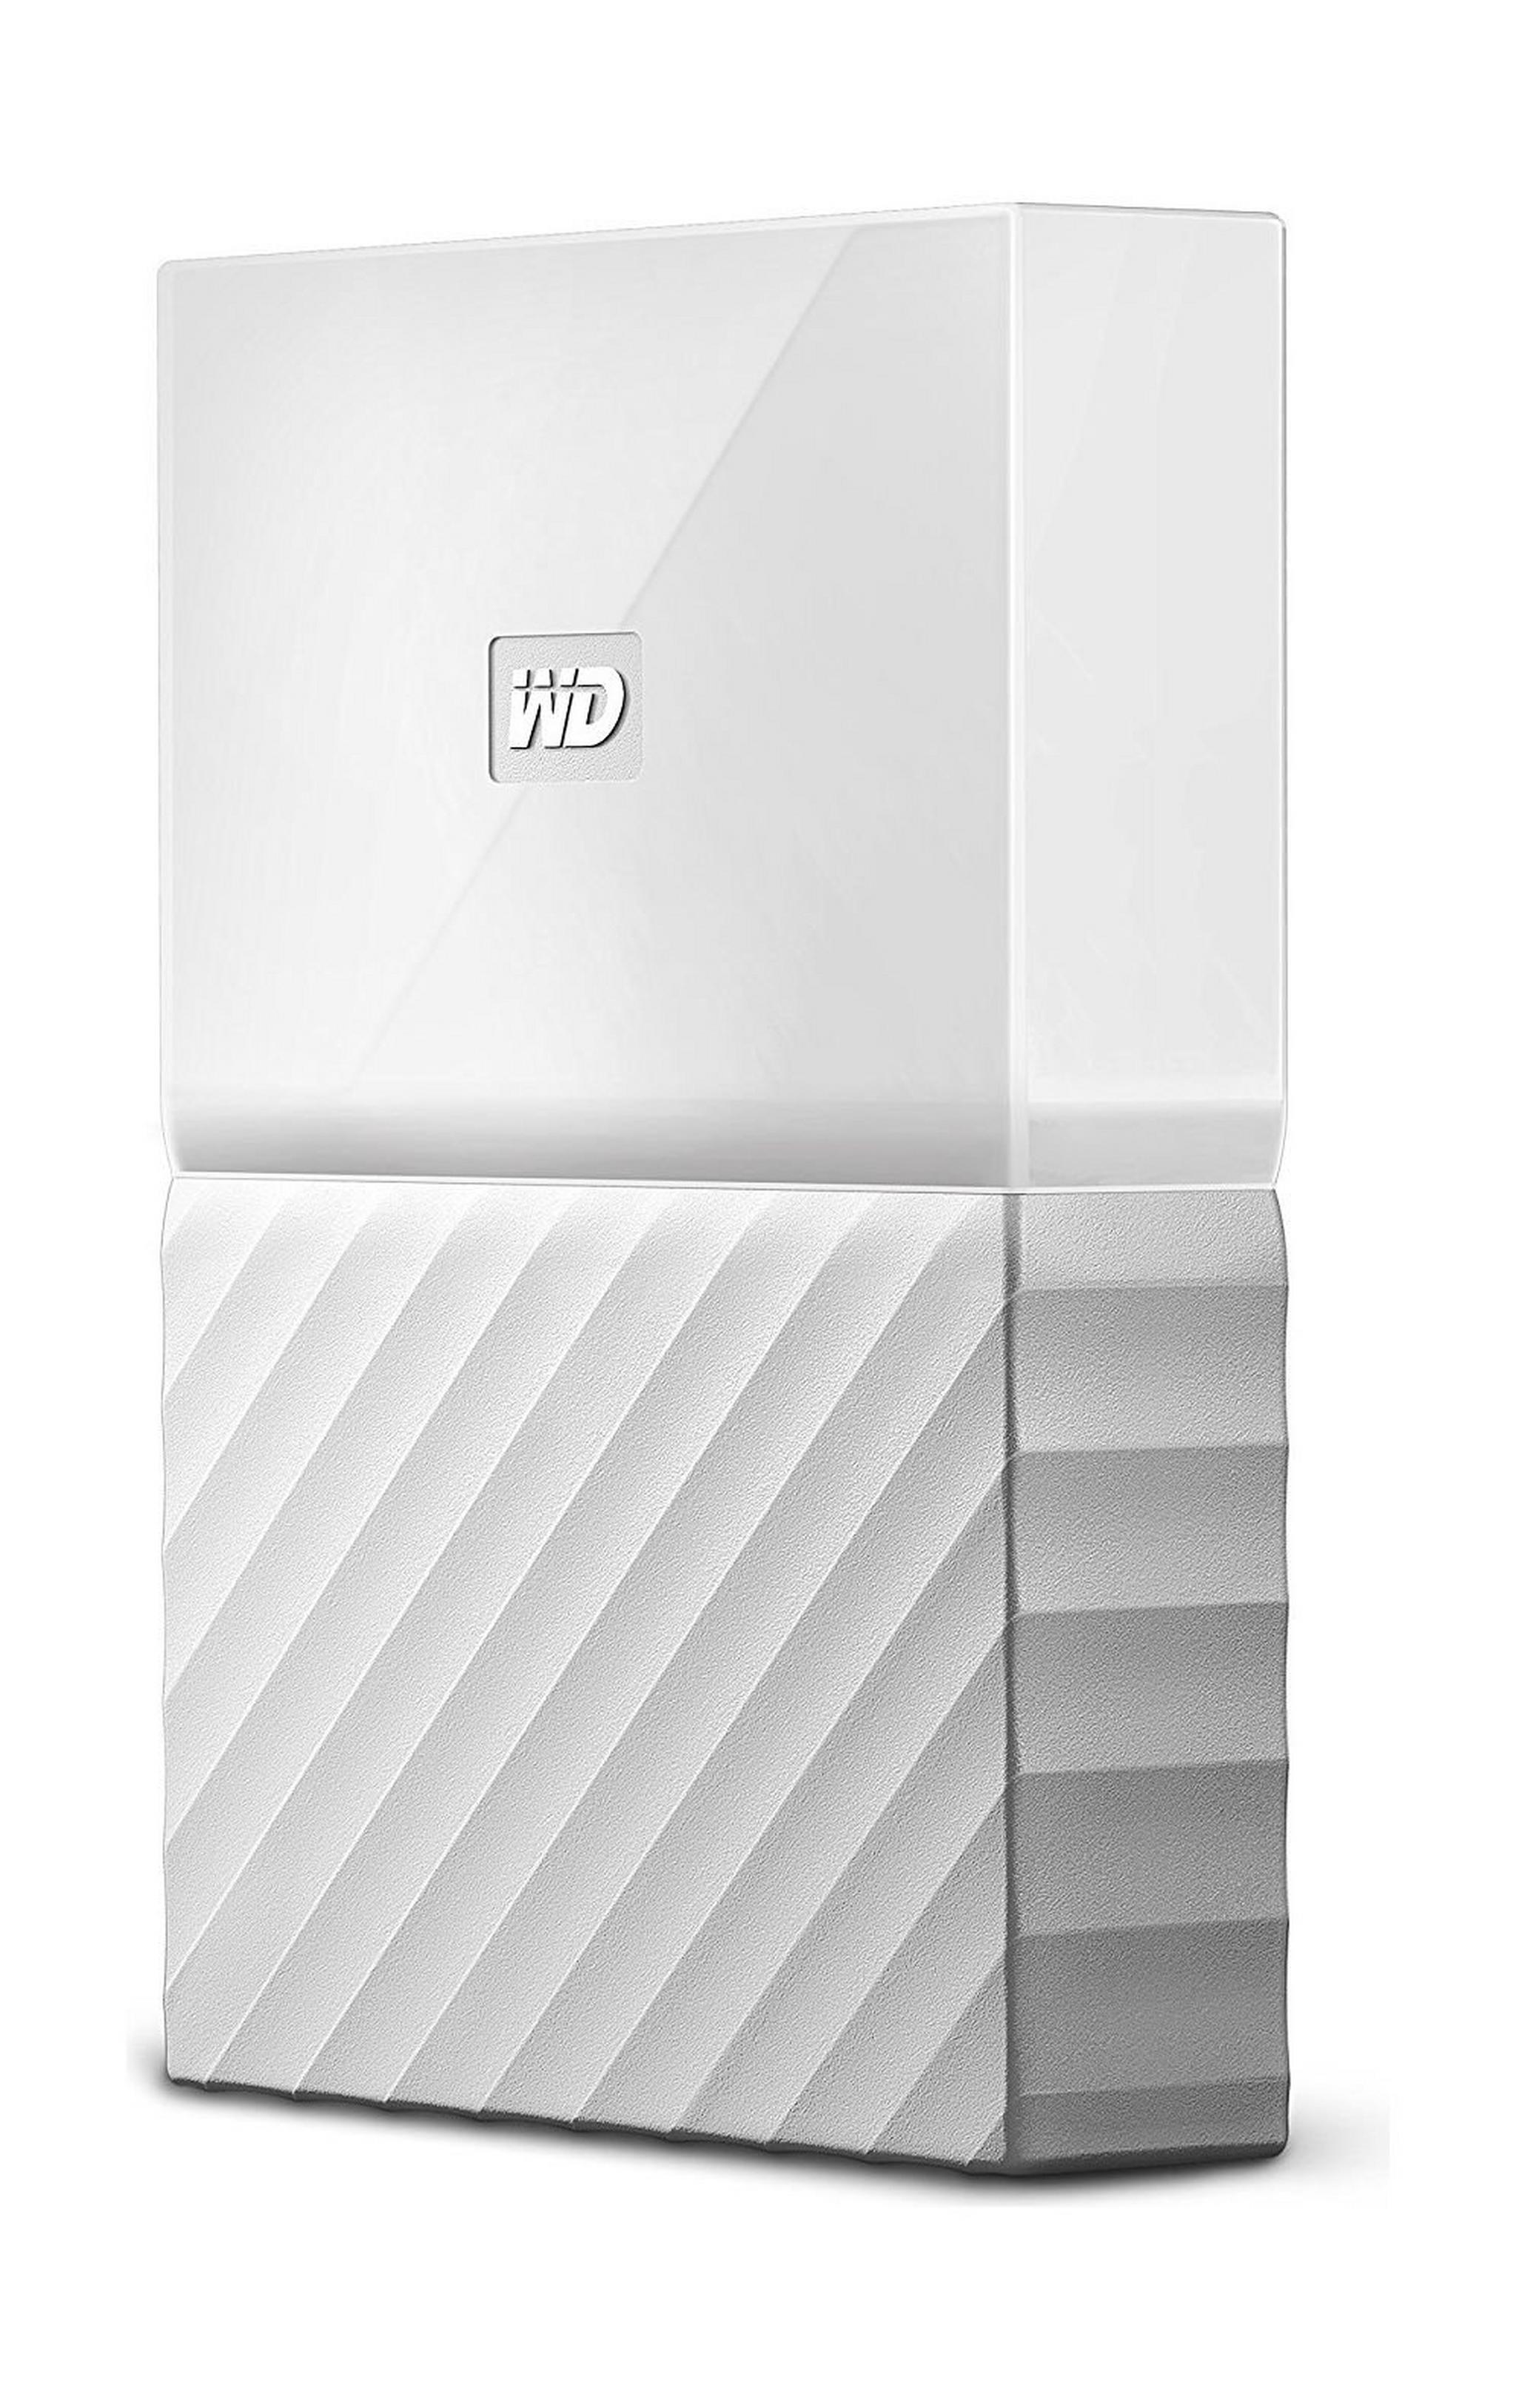 WD 4TB My Passport USB 3.0 External Hard Drive - White